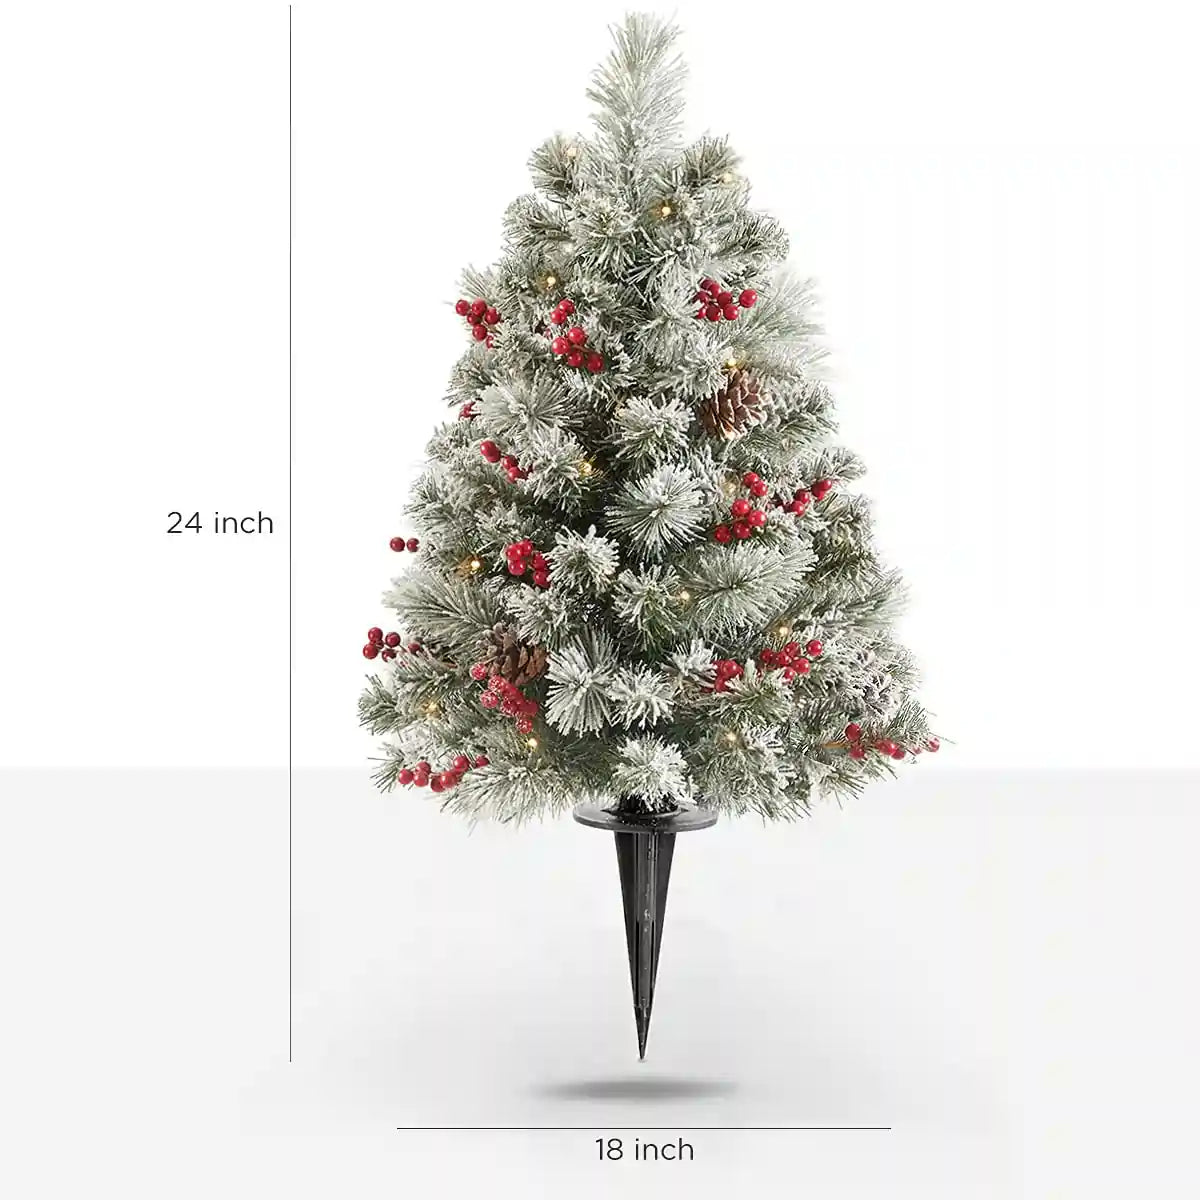 mini Christmas tree size